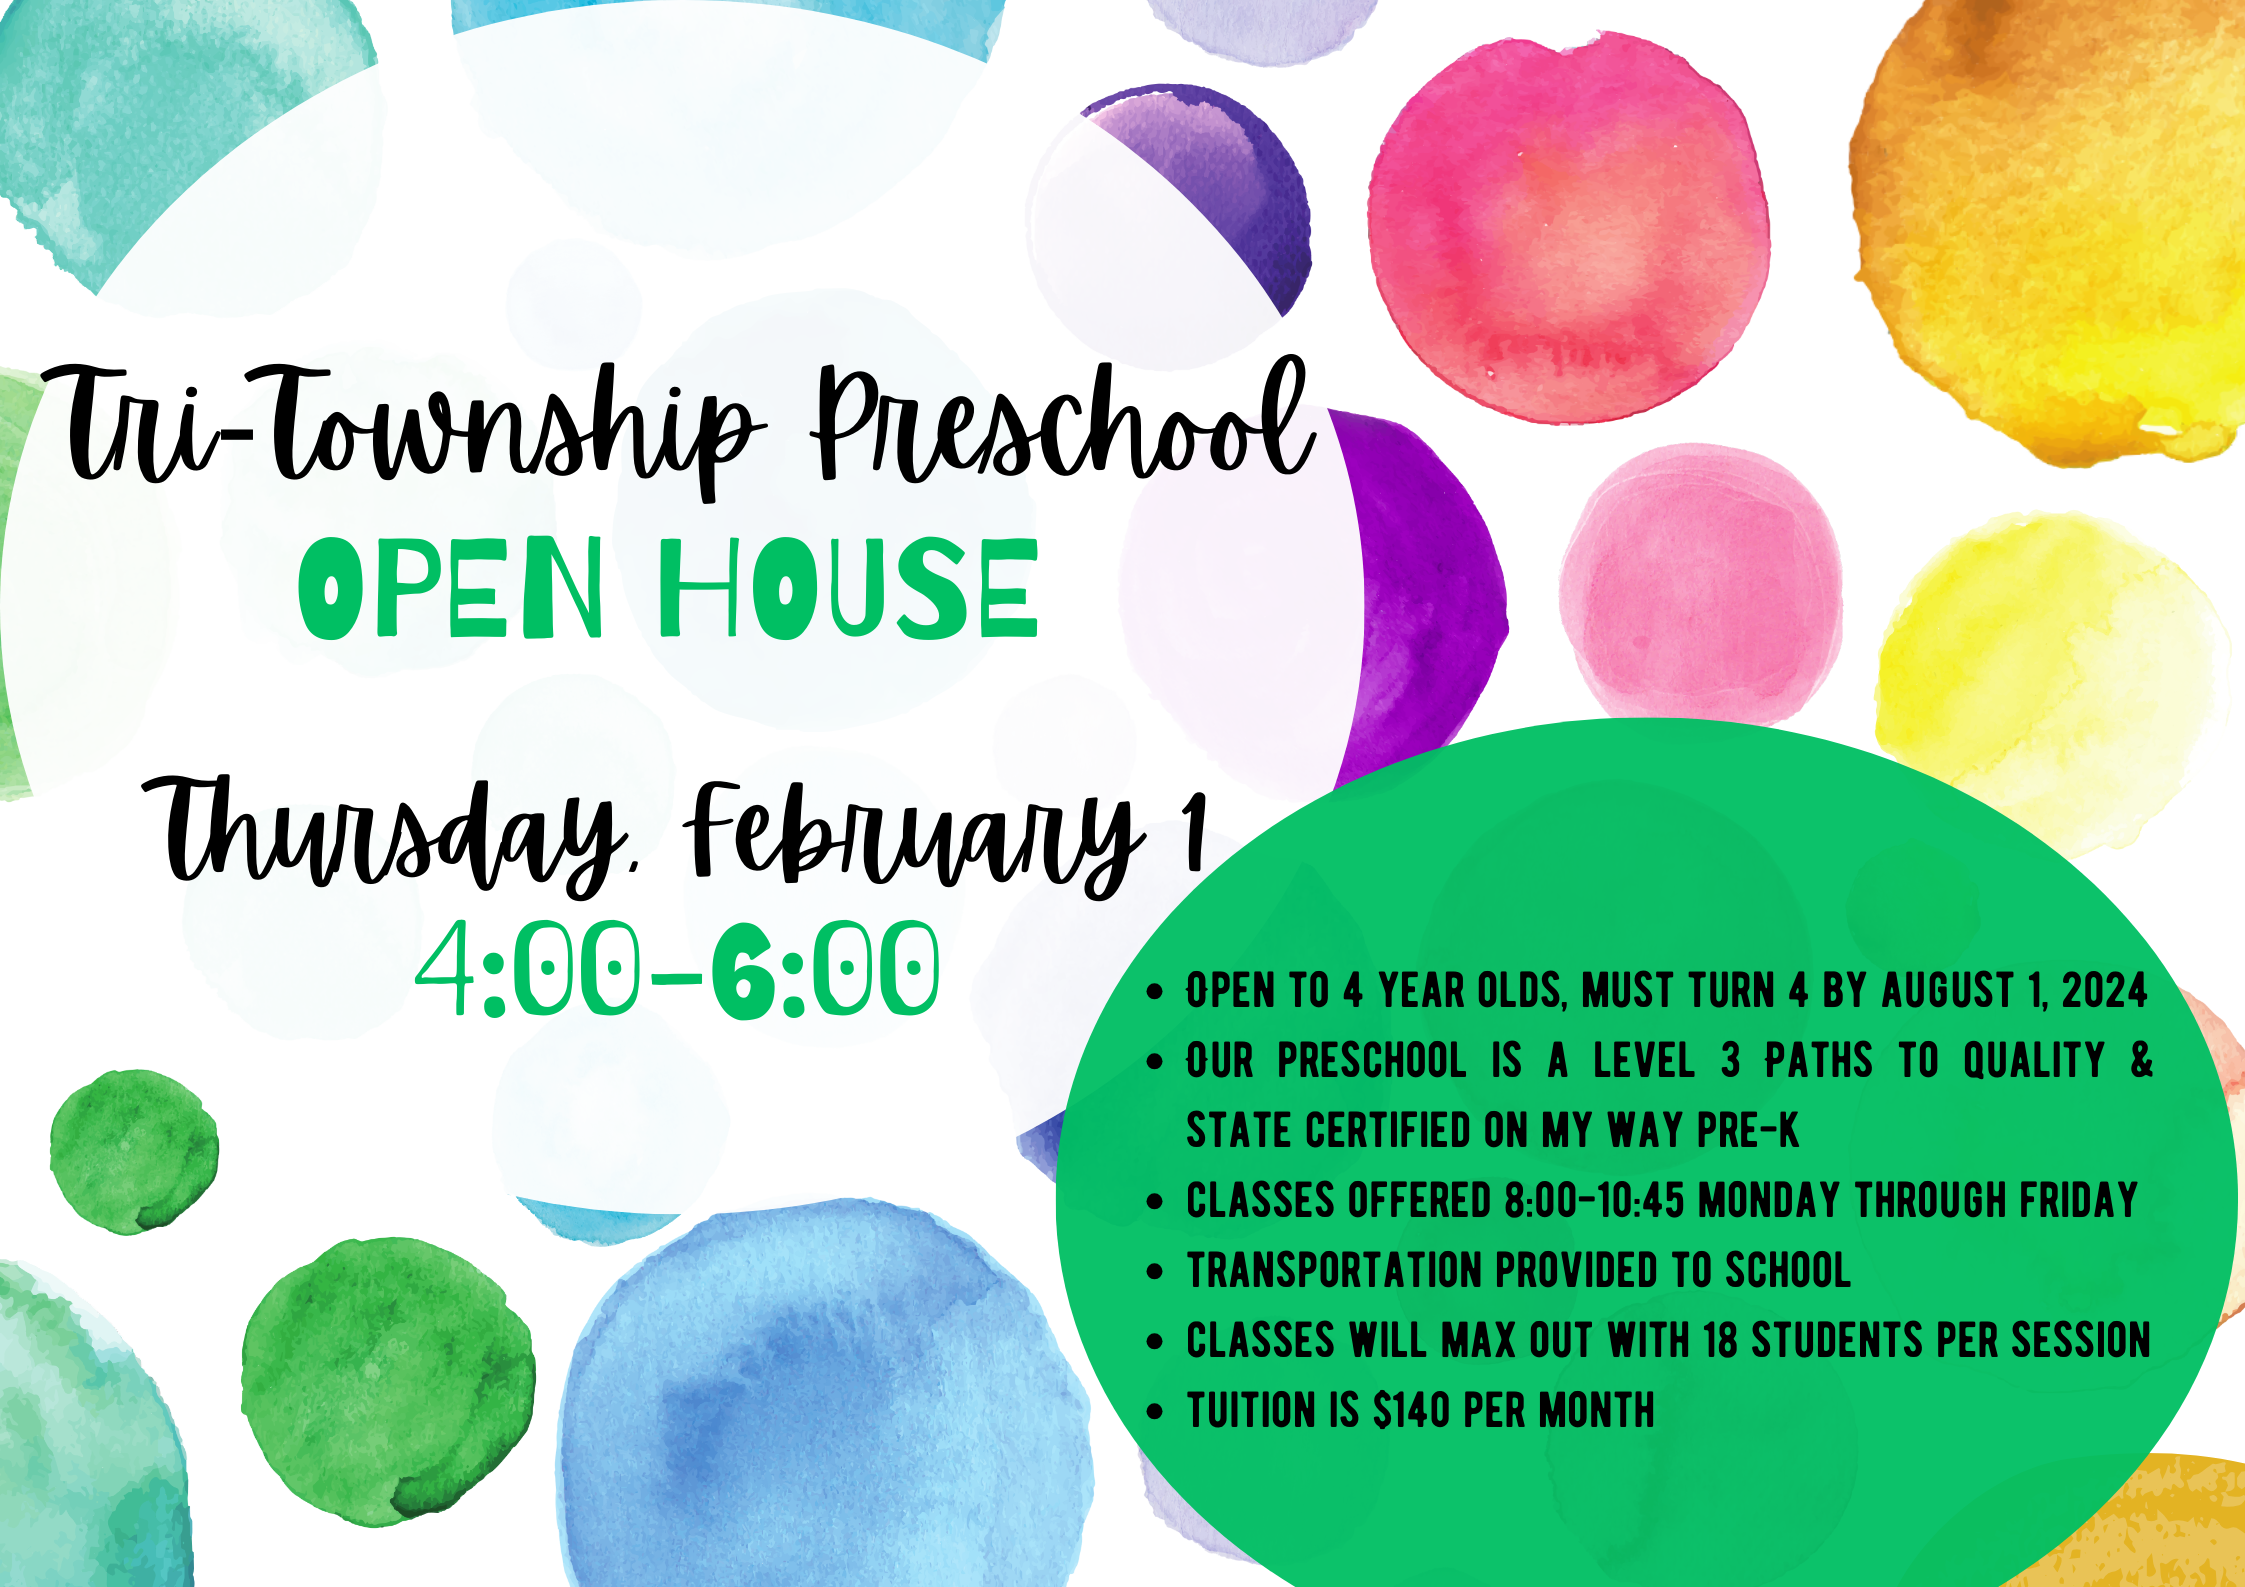 Preschool Open House Information for Parents UPDATED